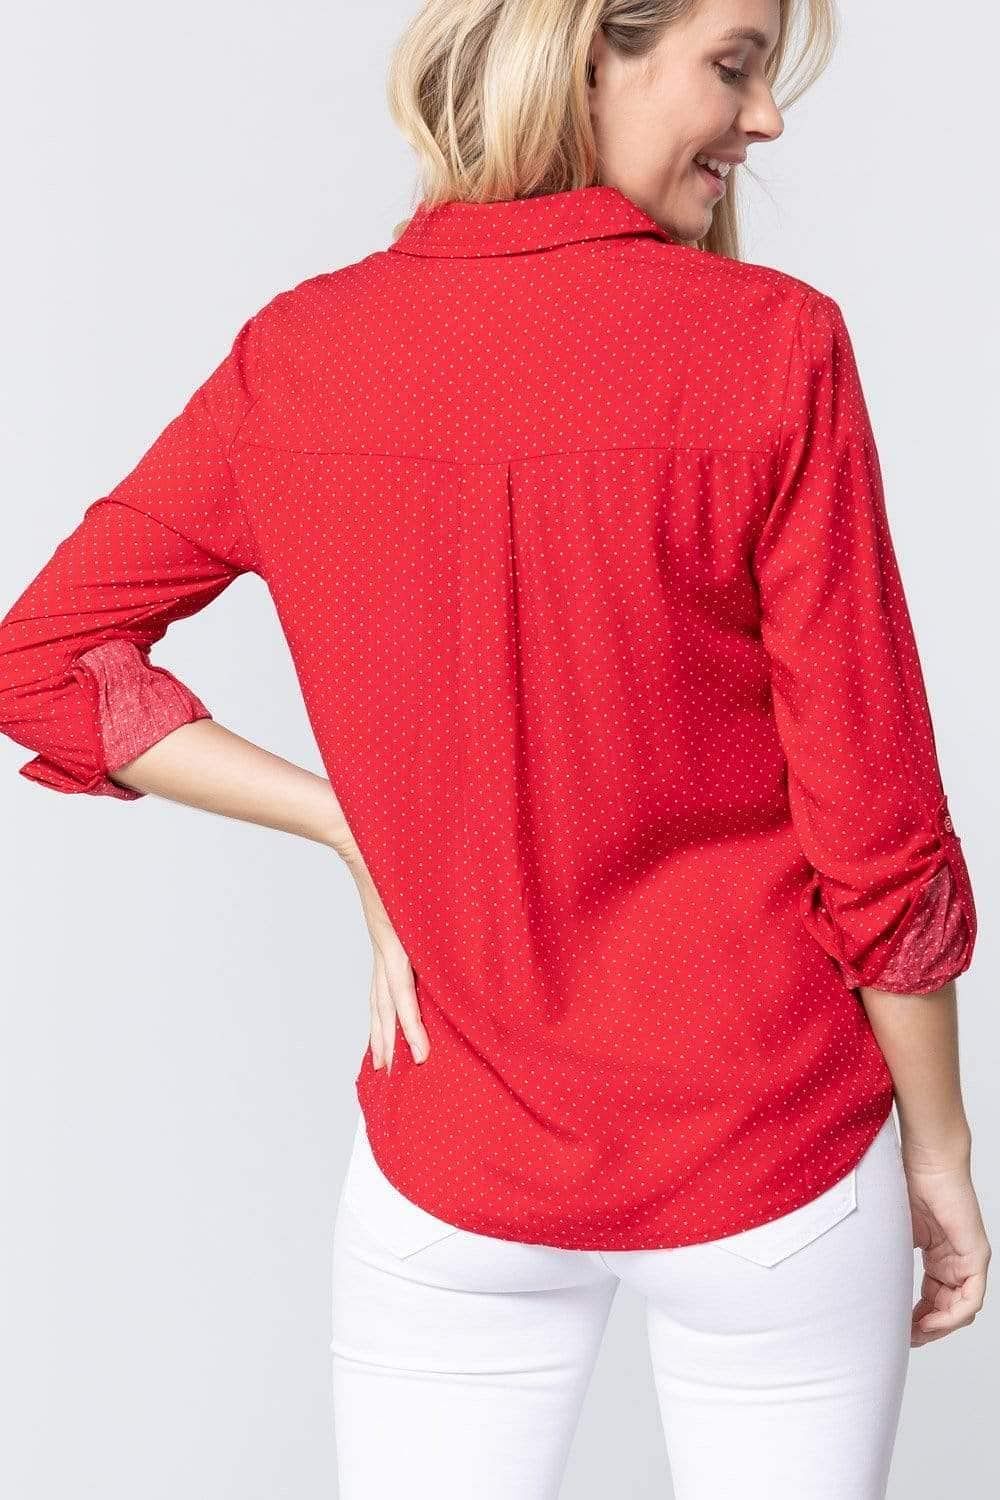 Red Roll Up Sleeve Polka Dot Shirt - Shopping Therapy, LLC Shirt